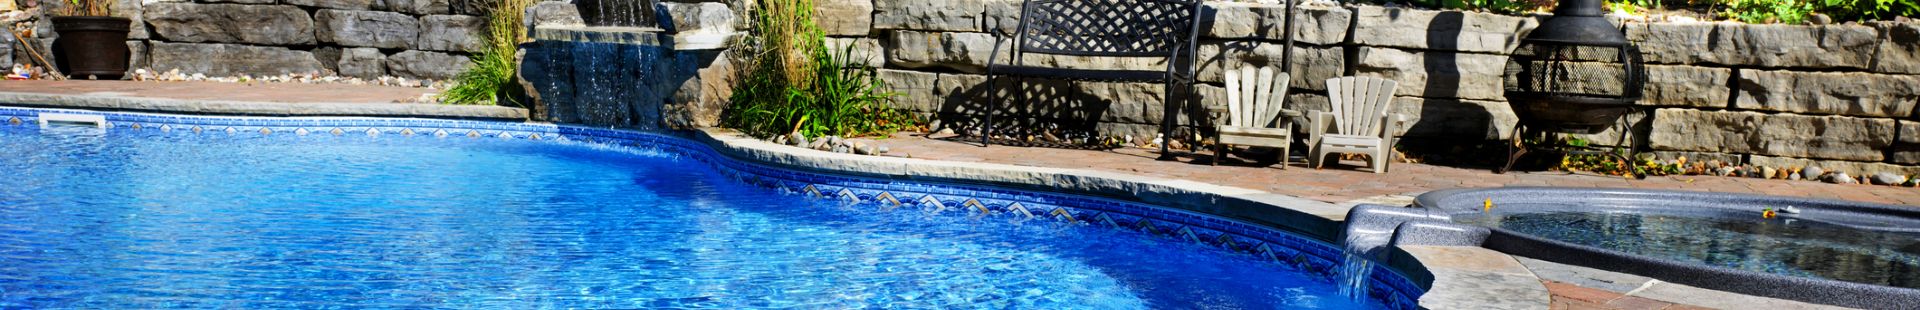 Inground pool financing: pool with spa in backyard